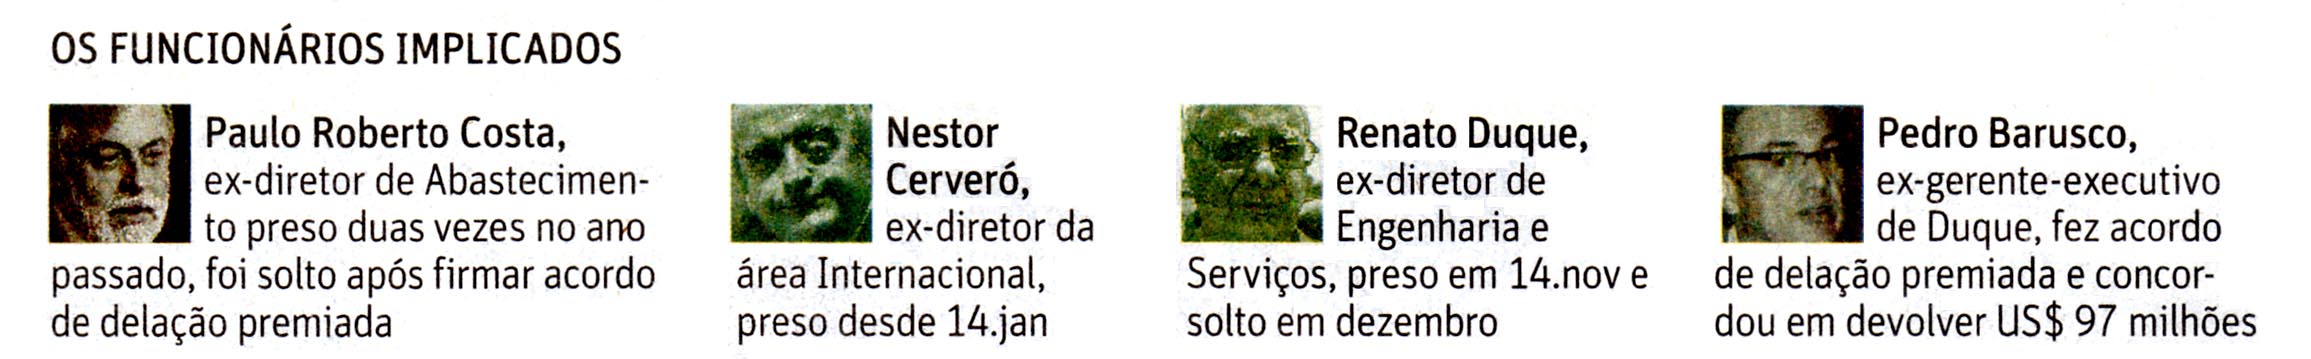 Folha de So Paulo - 05/02/2015 - PETROBRAS: Graa renuncia